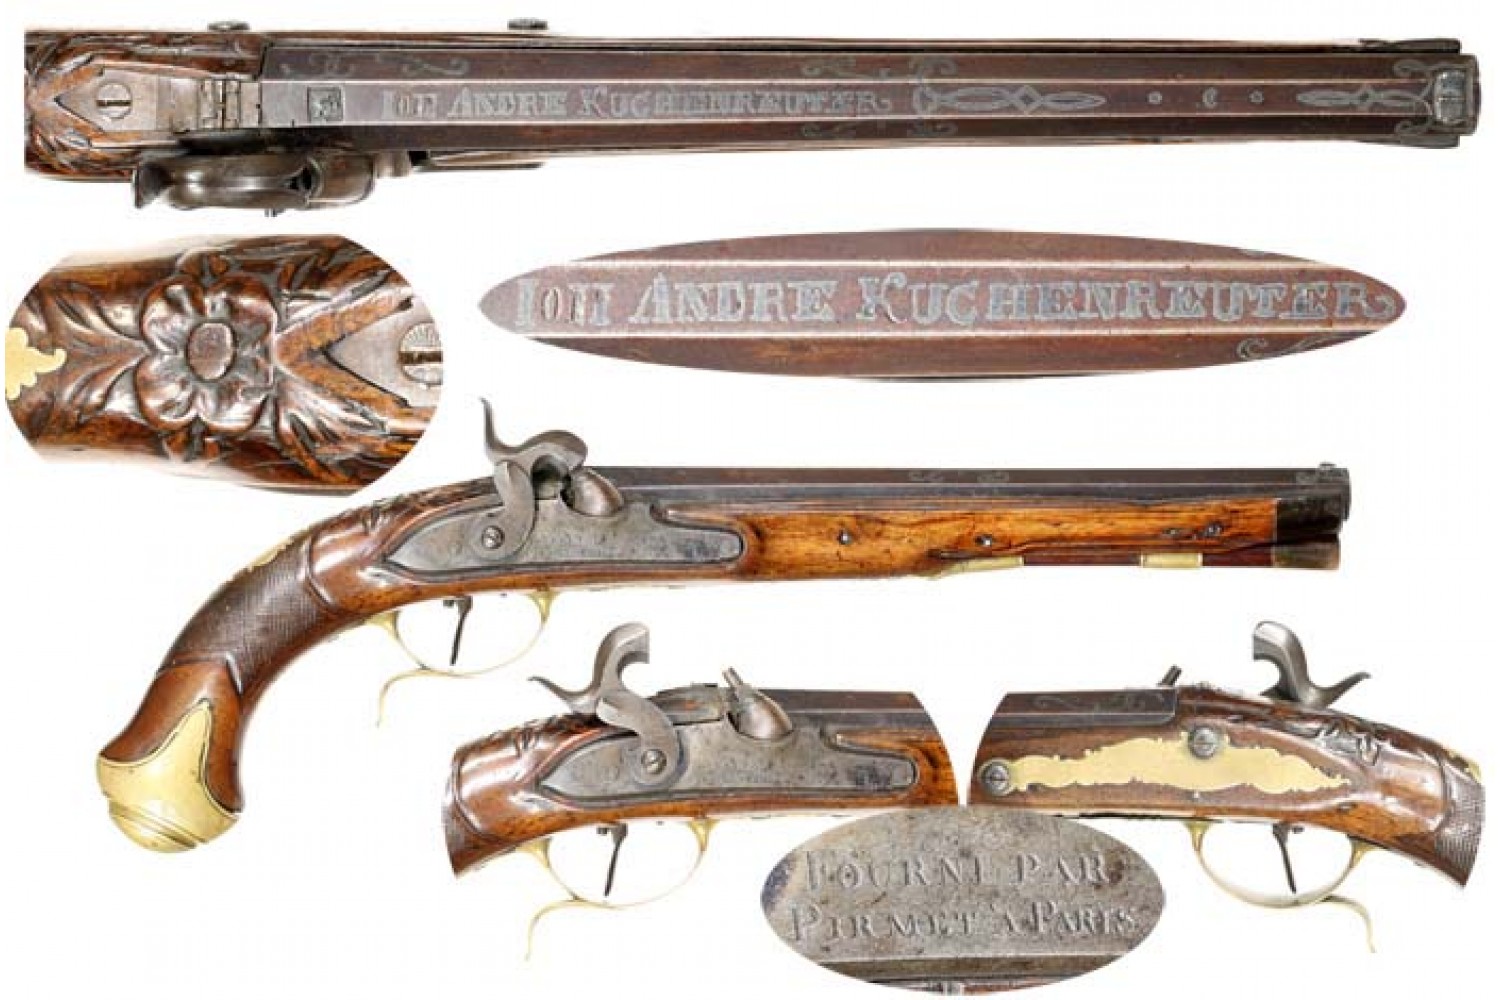 François Pirmet, Cased Pair of Flintlock Pistols with Accessories, French, Paris